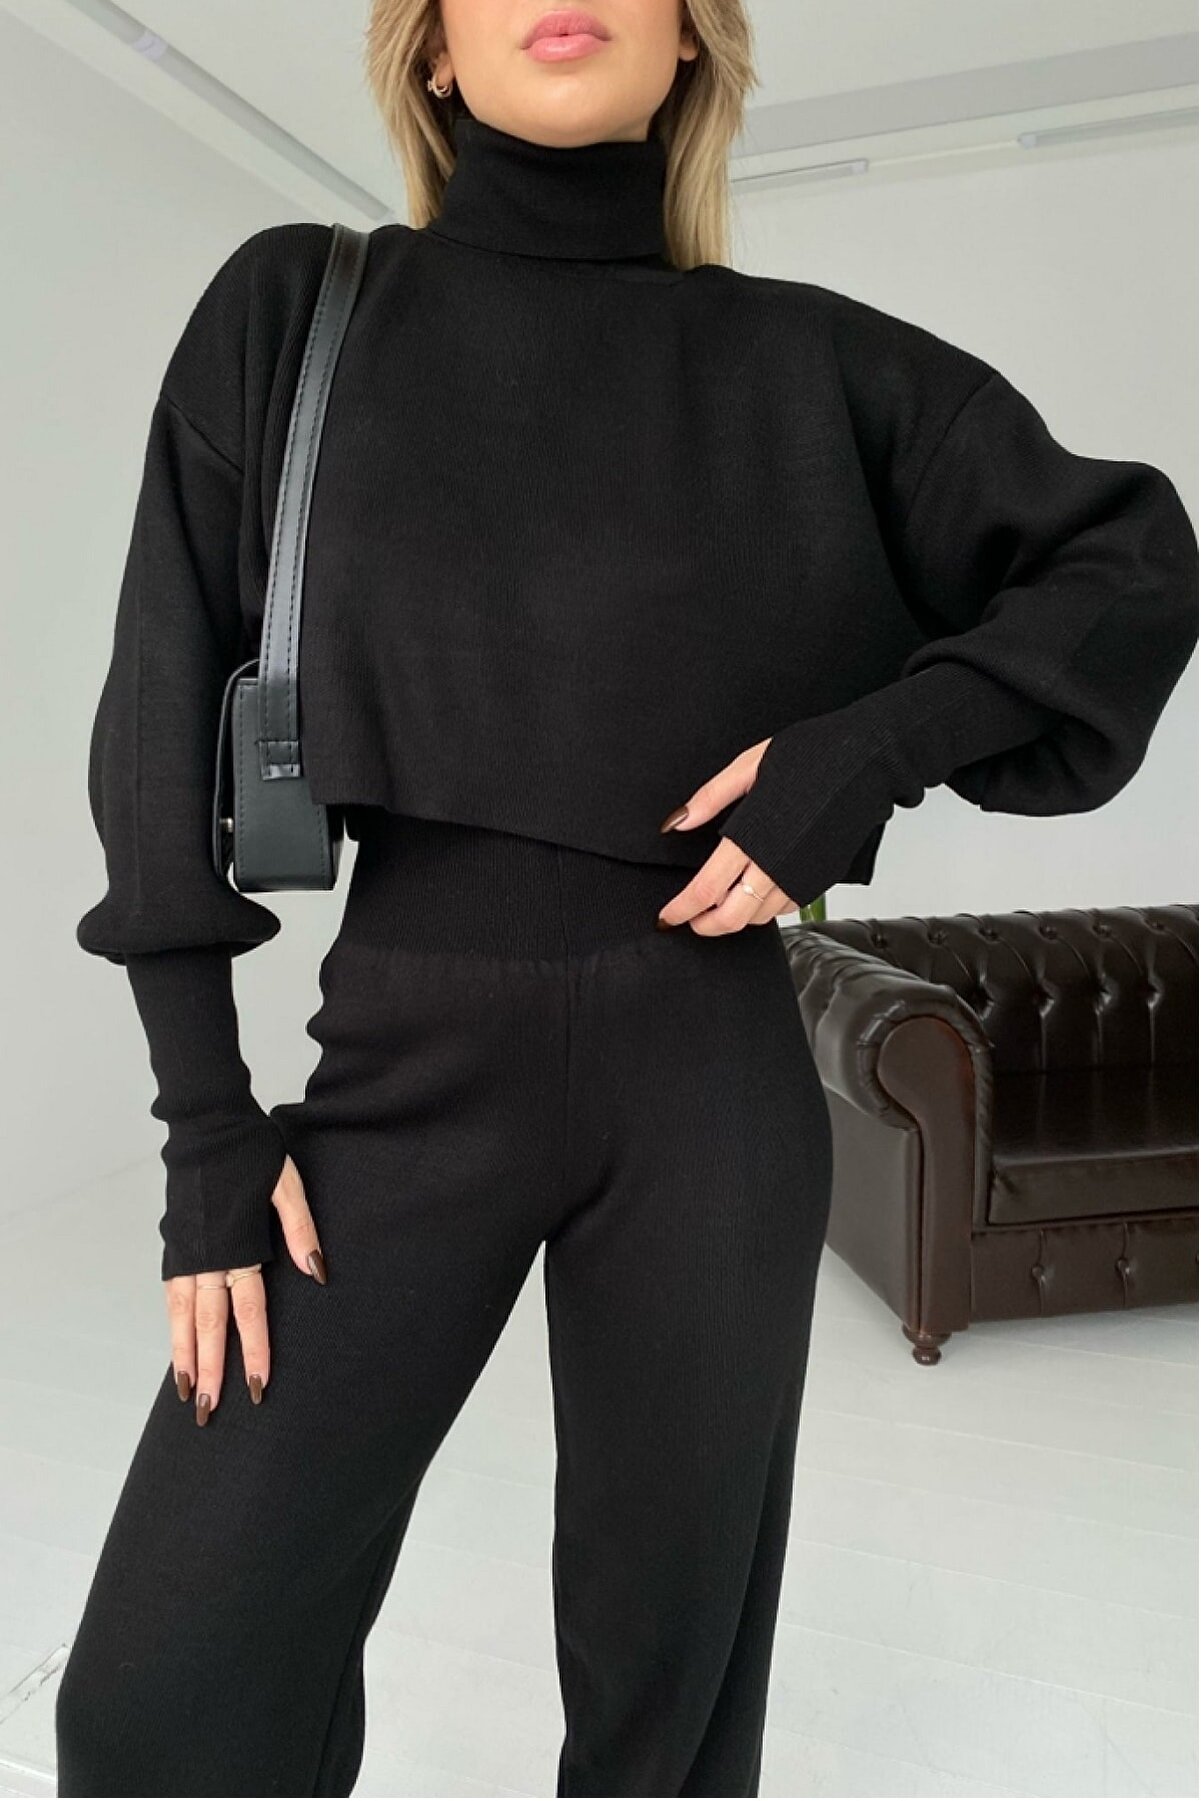 bayansepeti El Geçmeli Siyah Triko Crop Ve Yüksek Bel Siyah Triko Pantolon Takım 015